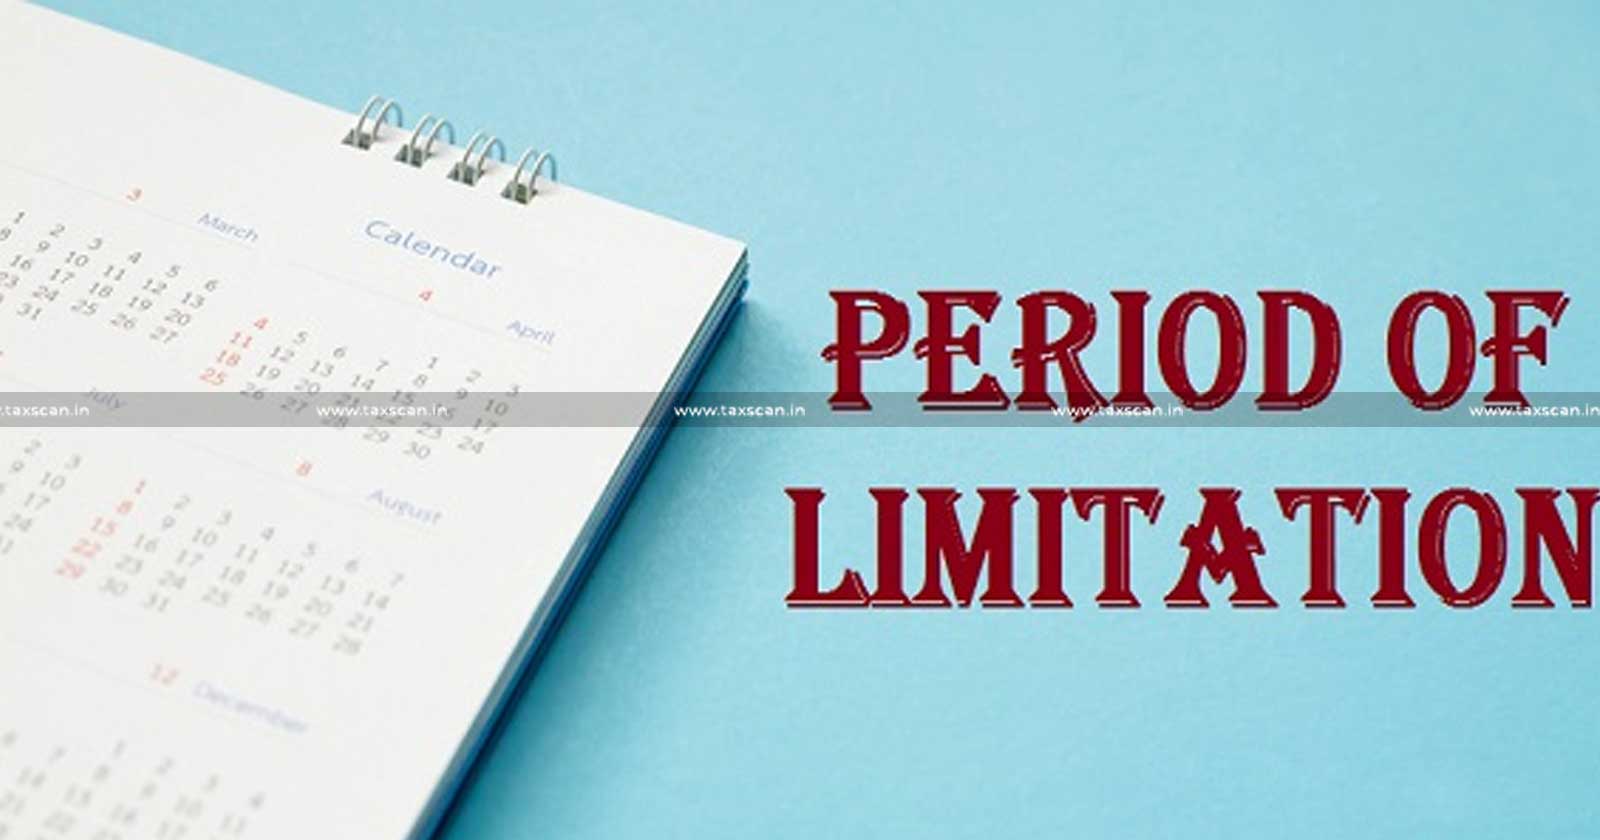 Longer Period of Limitation - Limitation - Entire Information - CESTAT - taxscan